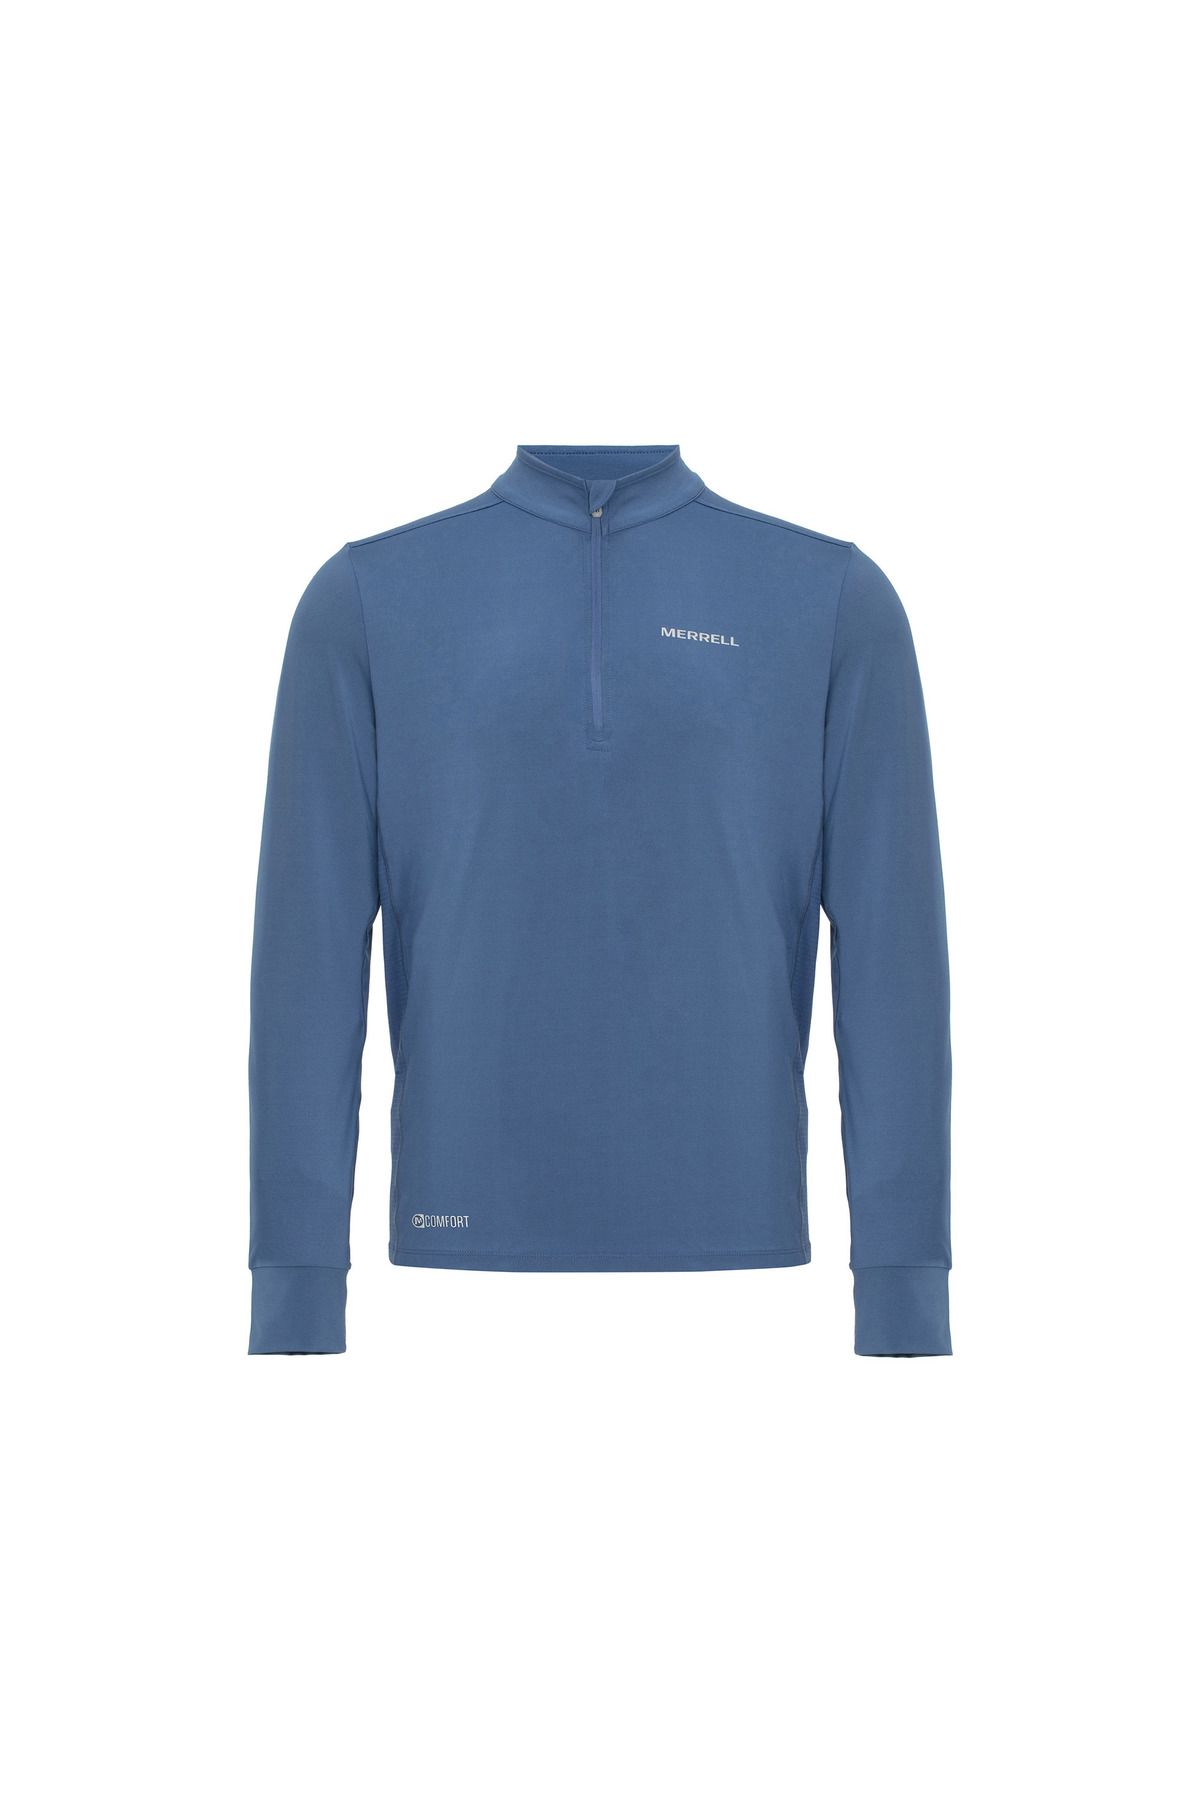 Merrell Triac Erkek Sweatshirt Mavi M23trıac